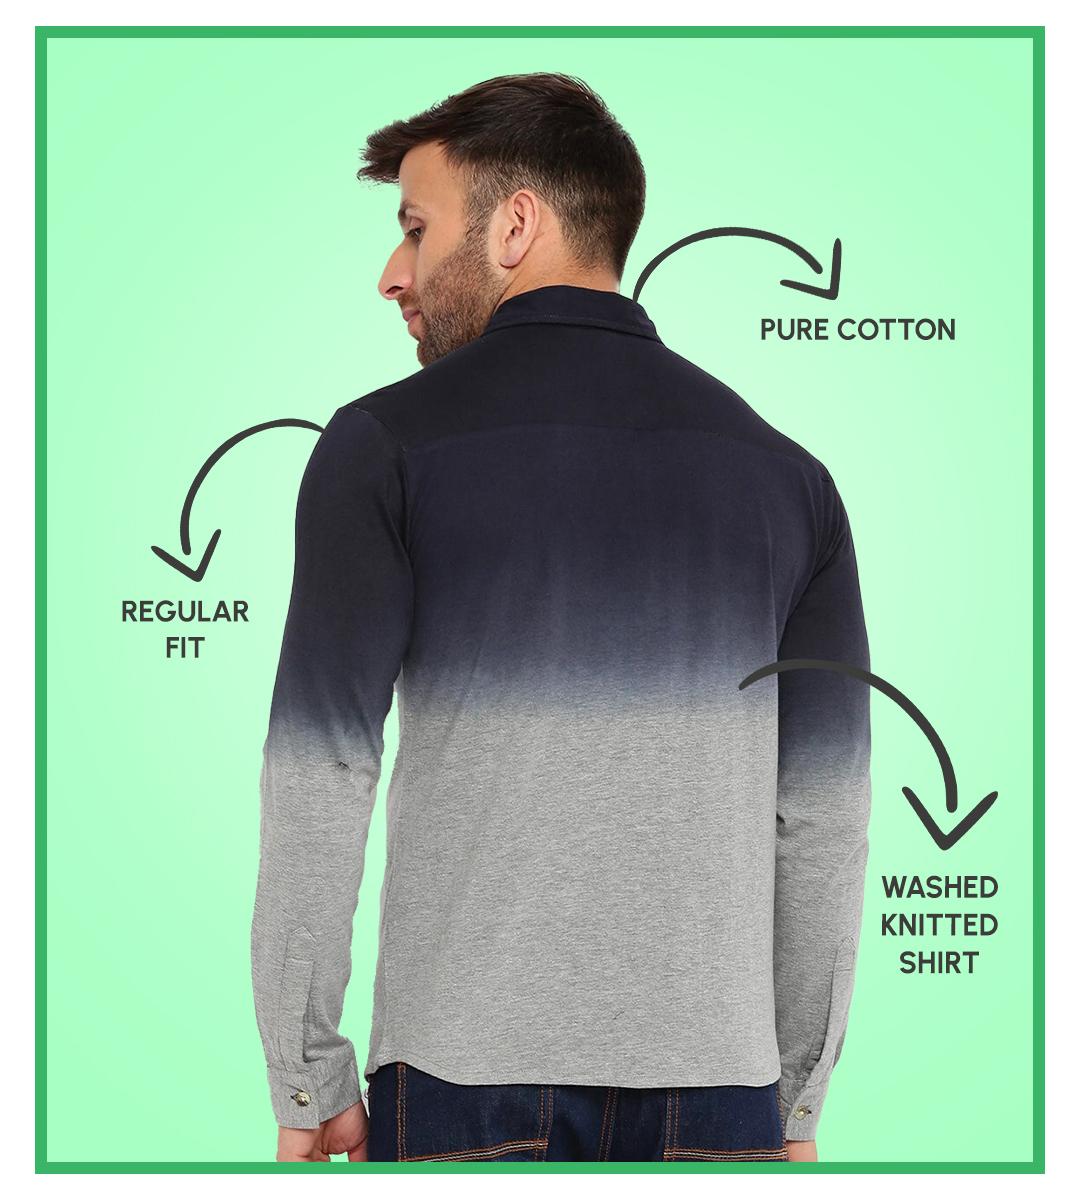 Gritstones Cotton Color Block Casual Shirt for Men